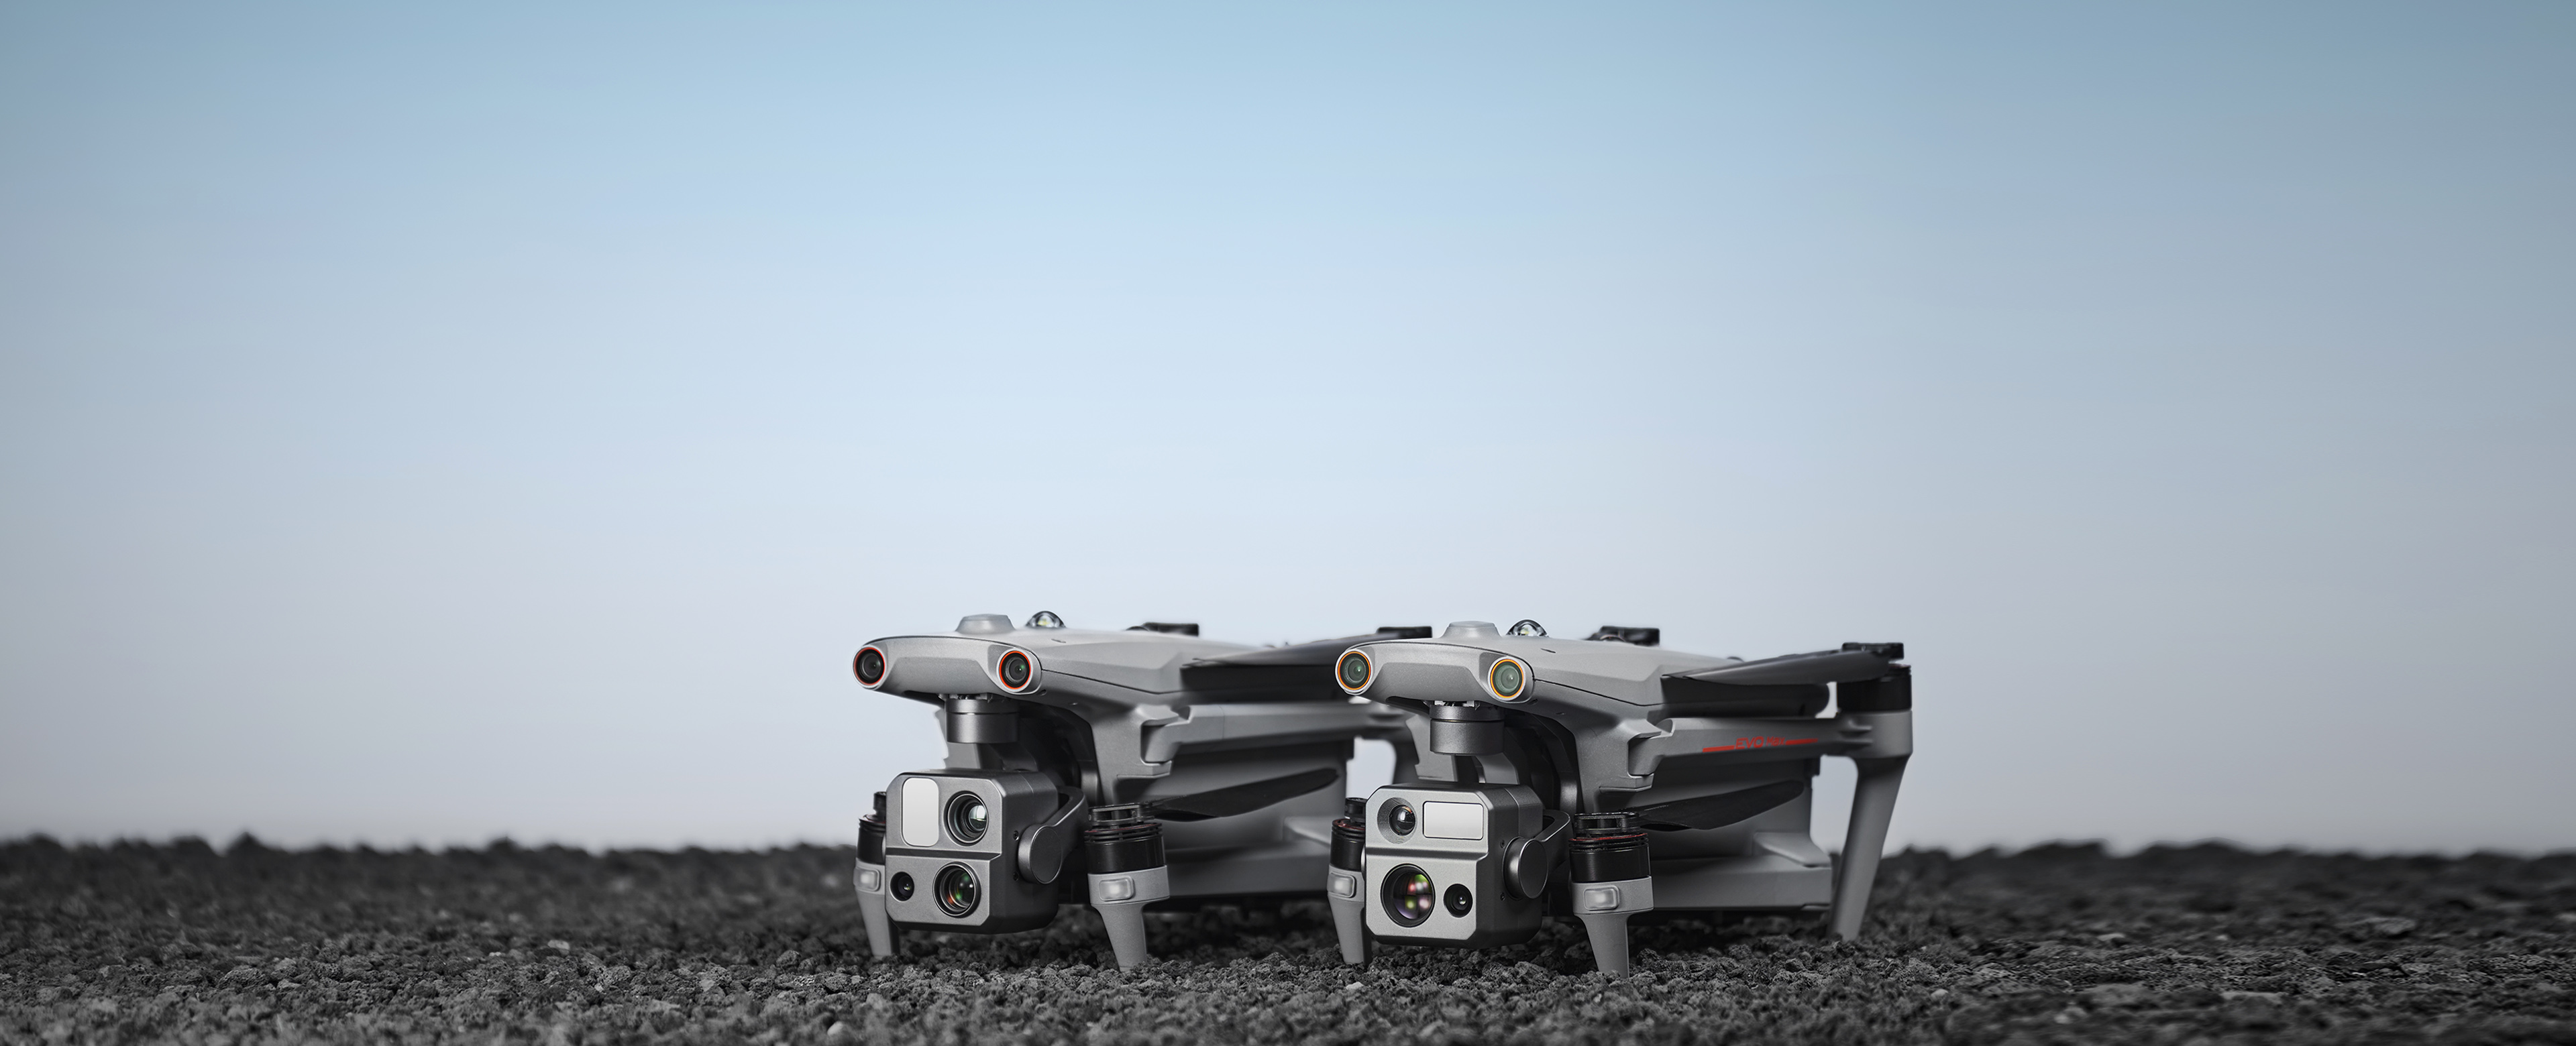 Aero Smart Drones promo